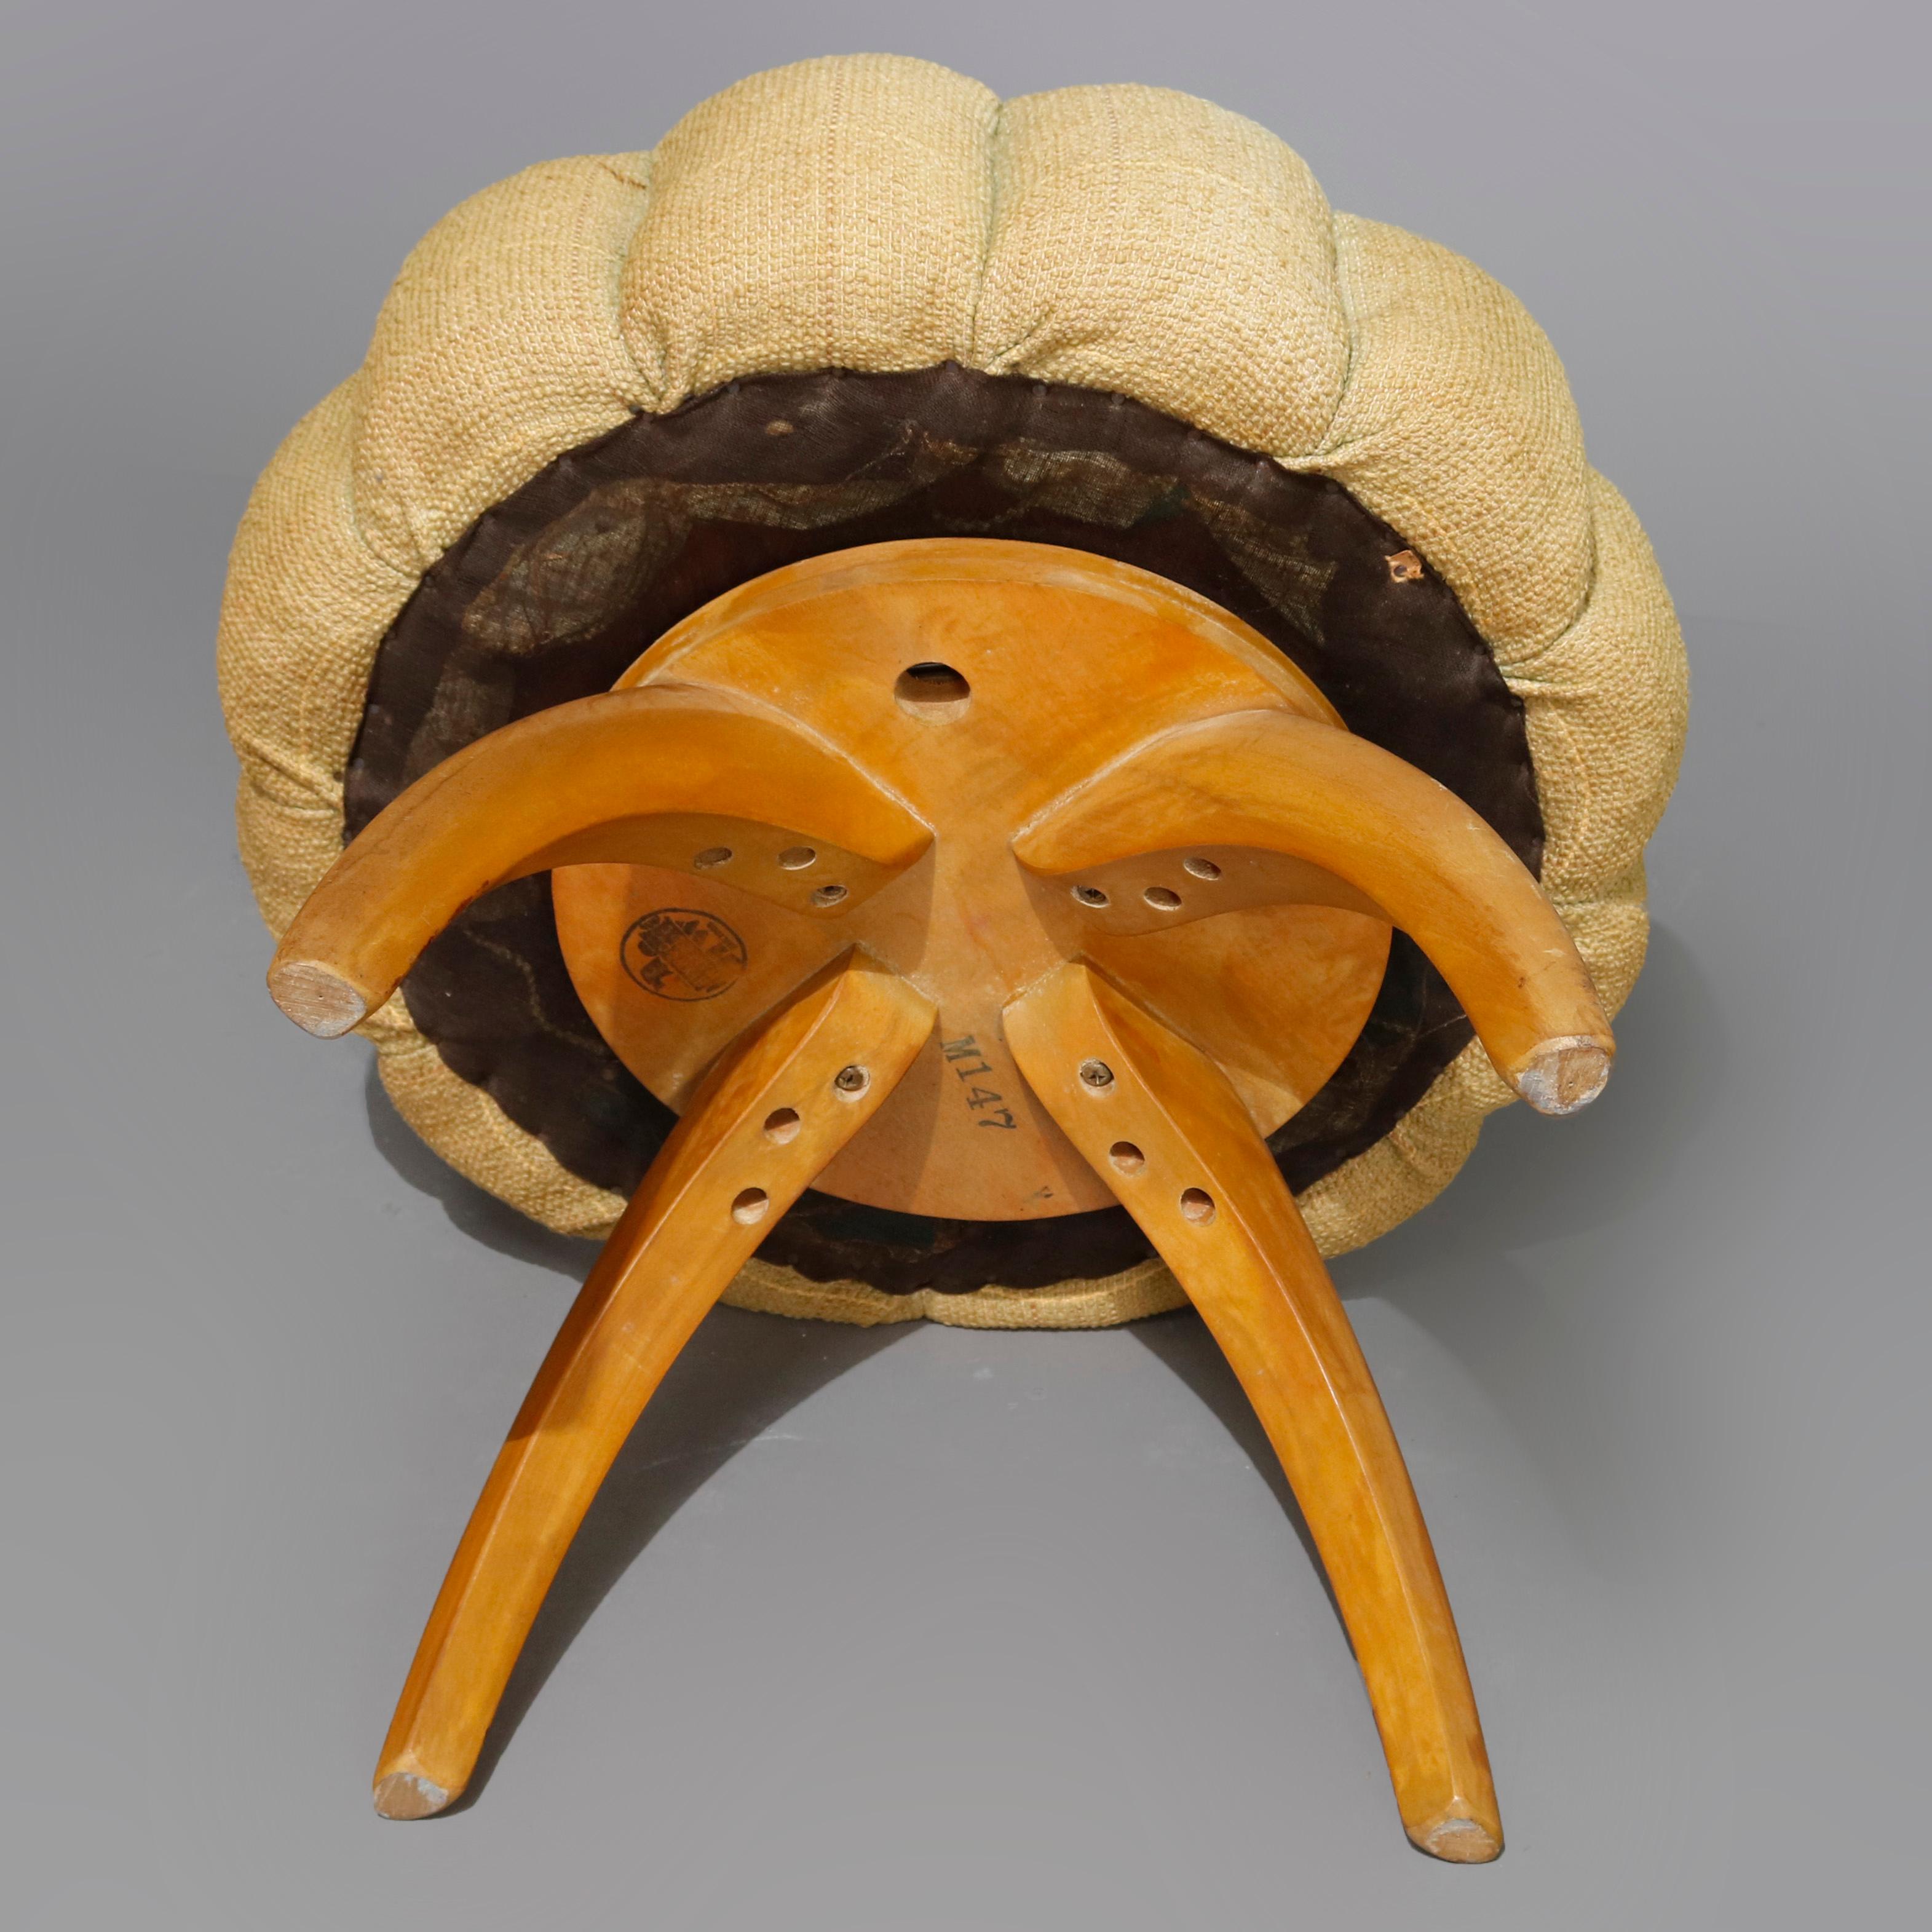 A Mid-Century Modern vanity stool by Heywood Wakefield in the Wishbone pattern offers pleated mushroom top rotating seat raised on convex birch legs, en verso maker label as photographed, 20th century

Measures - 17